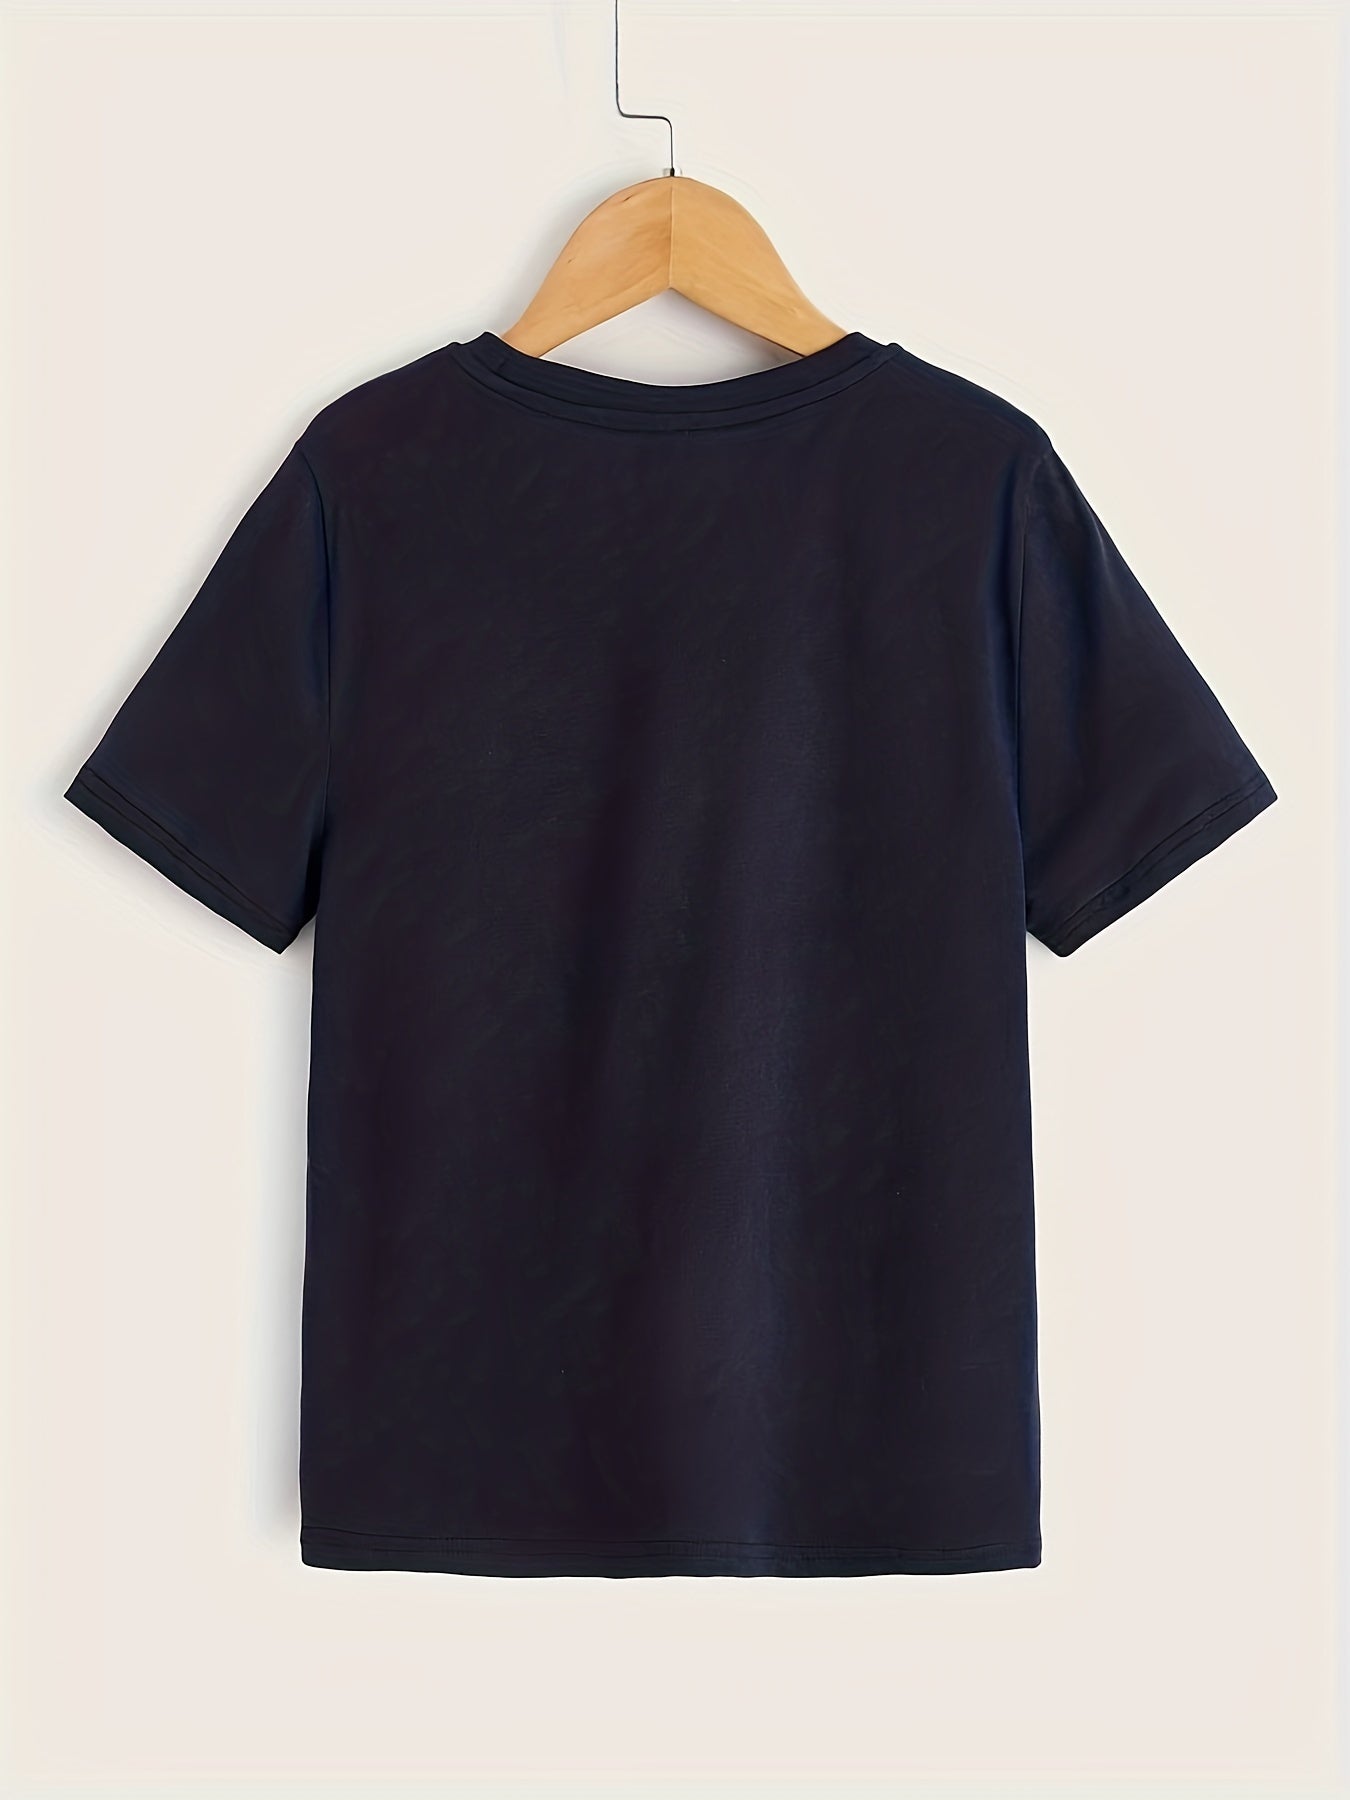 Trendy Gamepad Print Boys Creative T-shirt, Casual Lightweight Comfy Short Sleeve Tee Tops, Kids Clothes For Summer